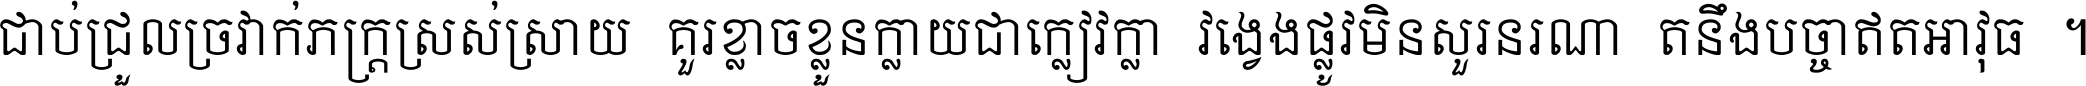 Khmer Mondulkiri A